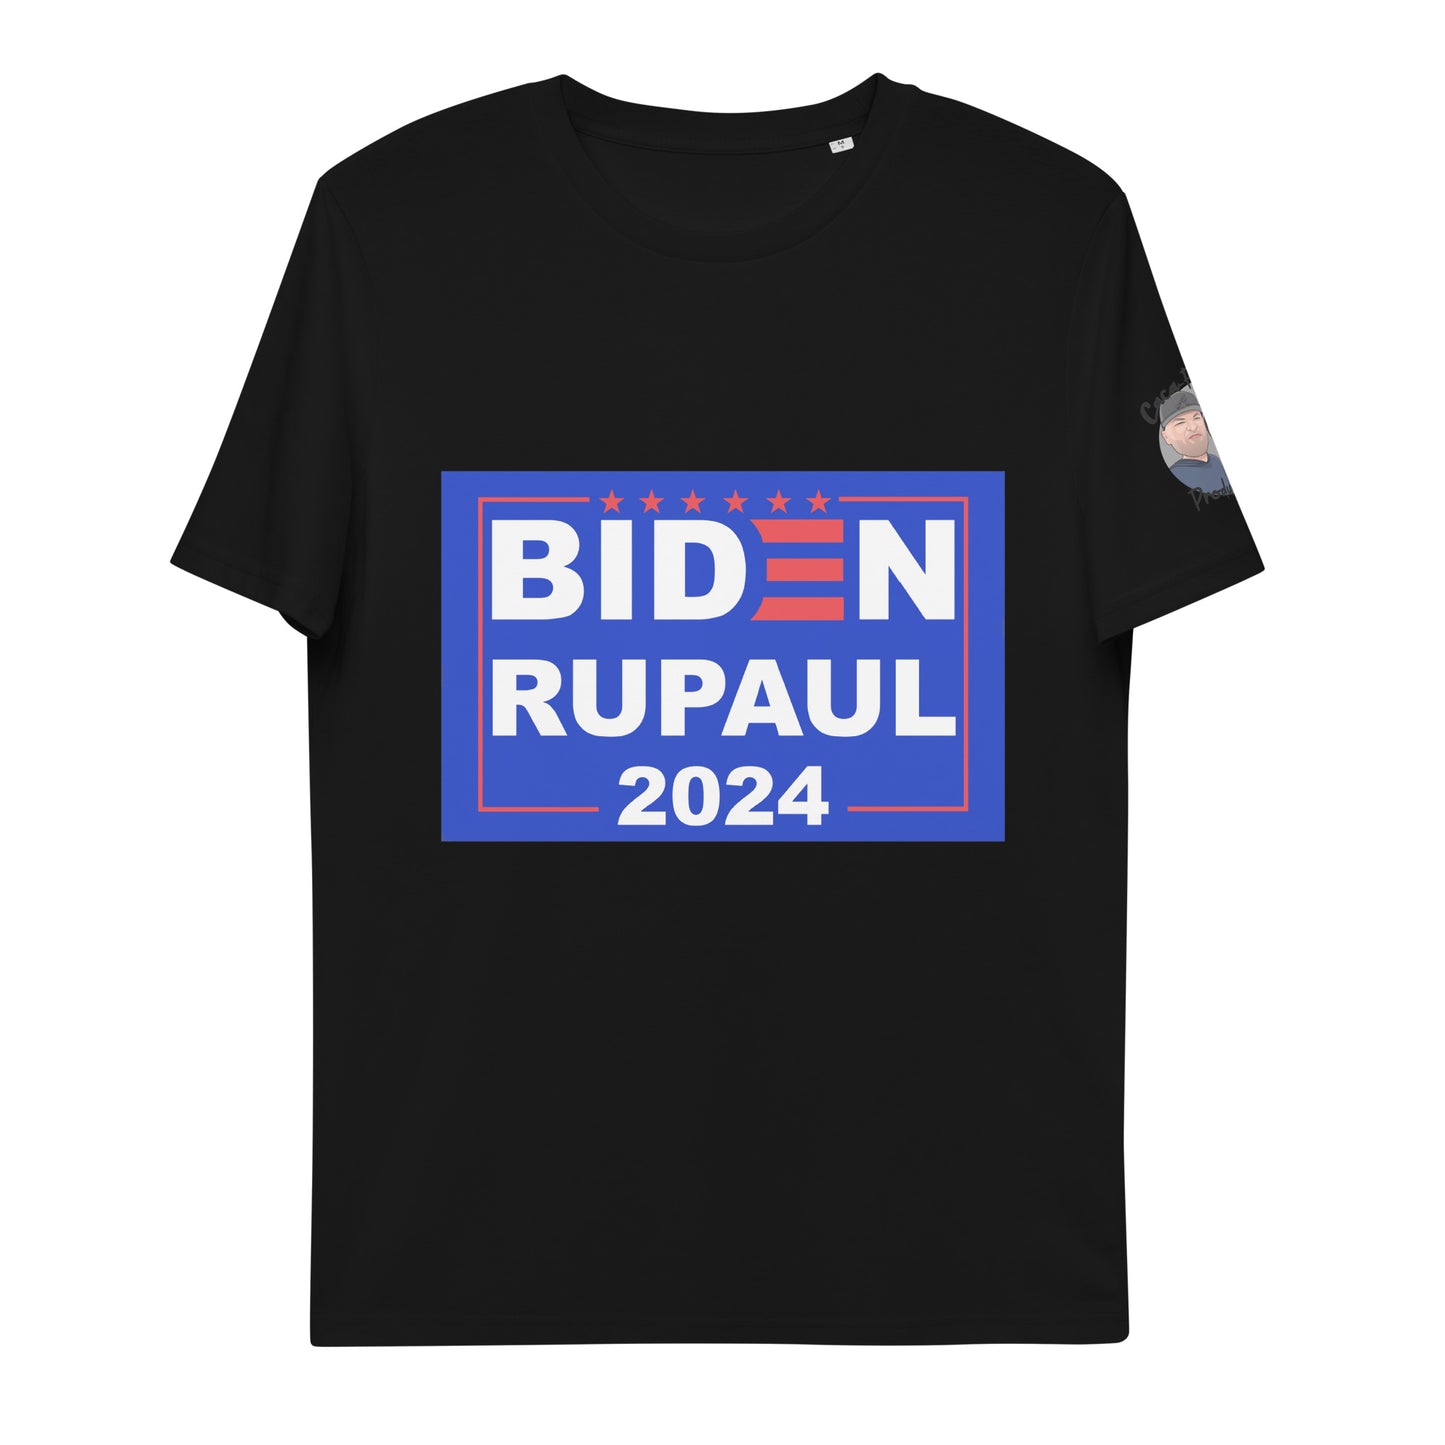 *Biden Rupaul* (Unisex organic cotton t-shirt